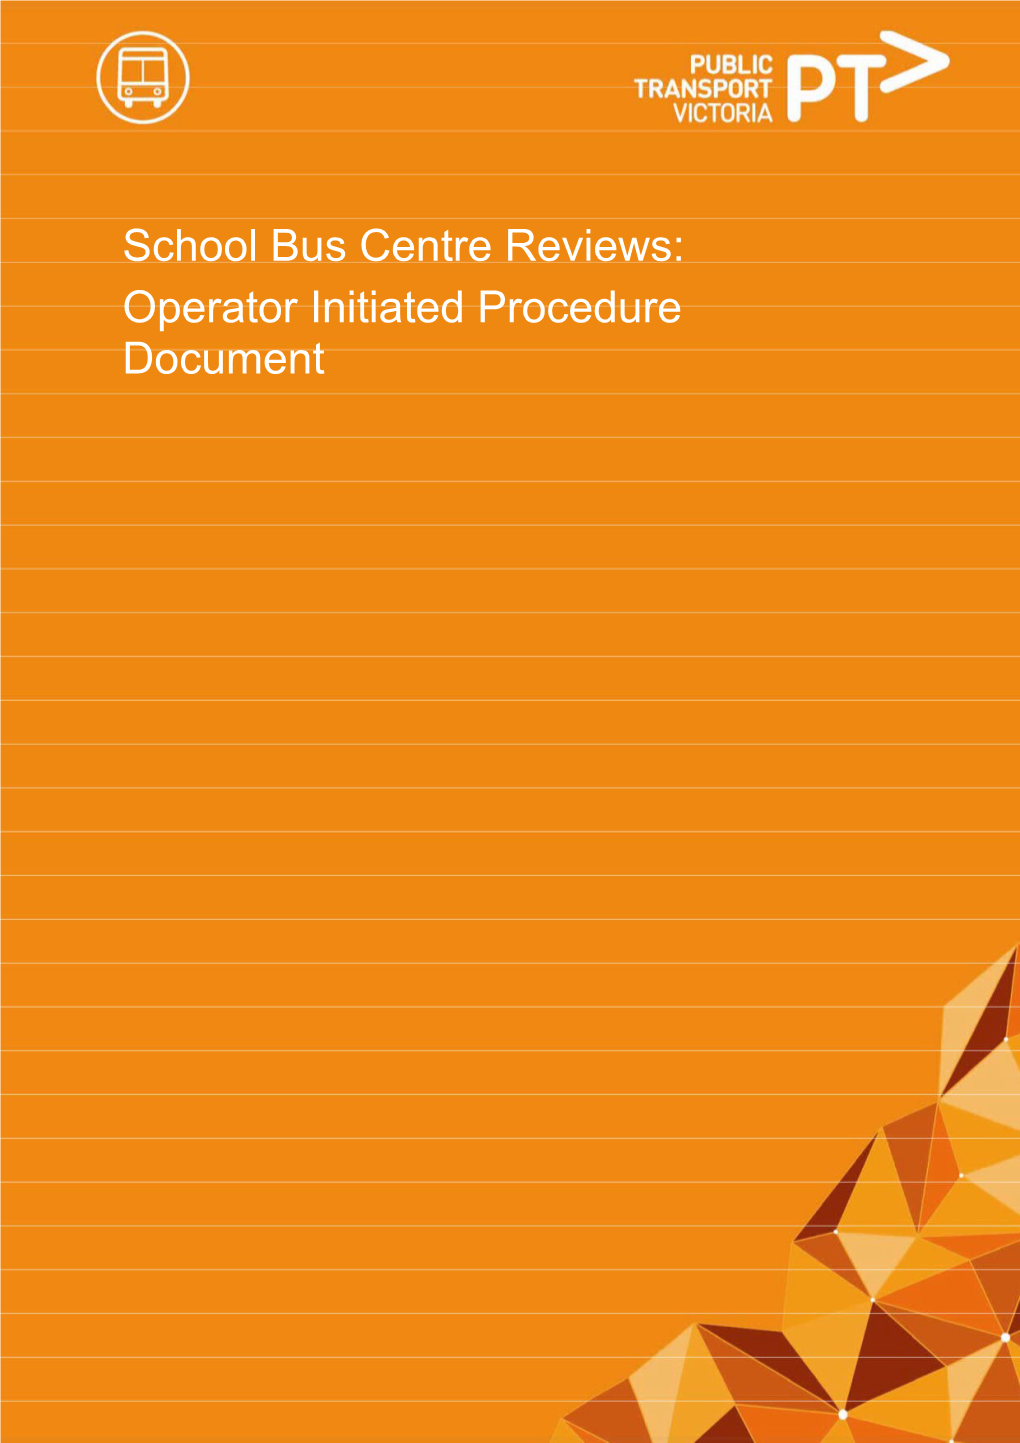 School Bus Centre Reviews - Operator Initiated Procedure Document